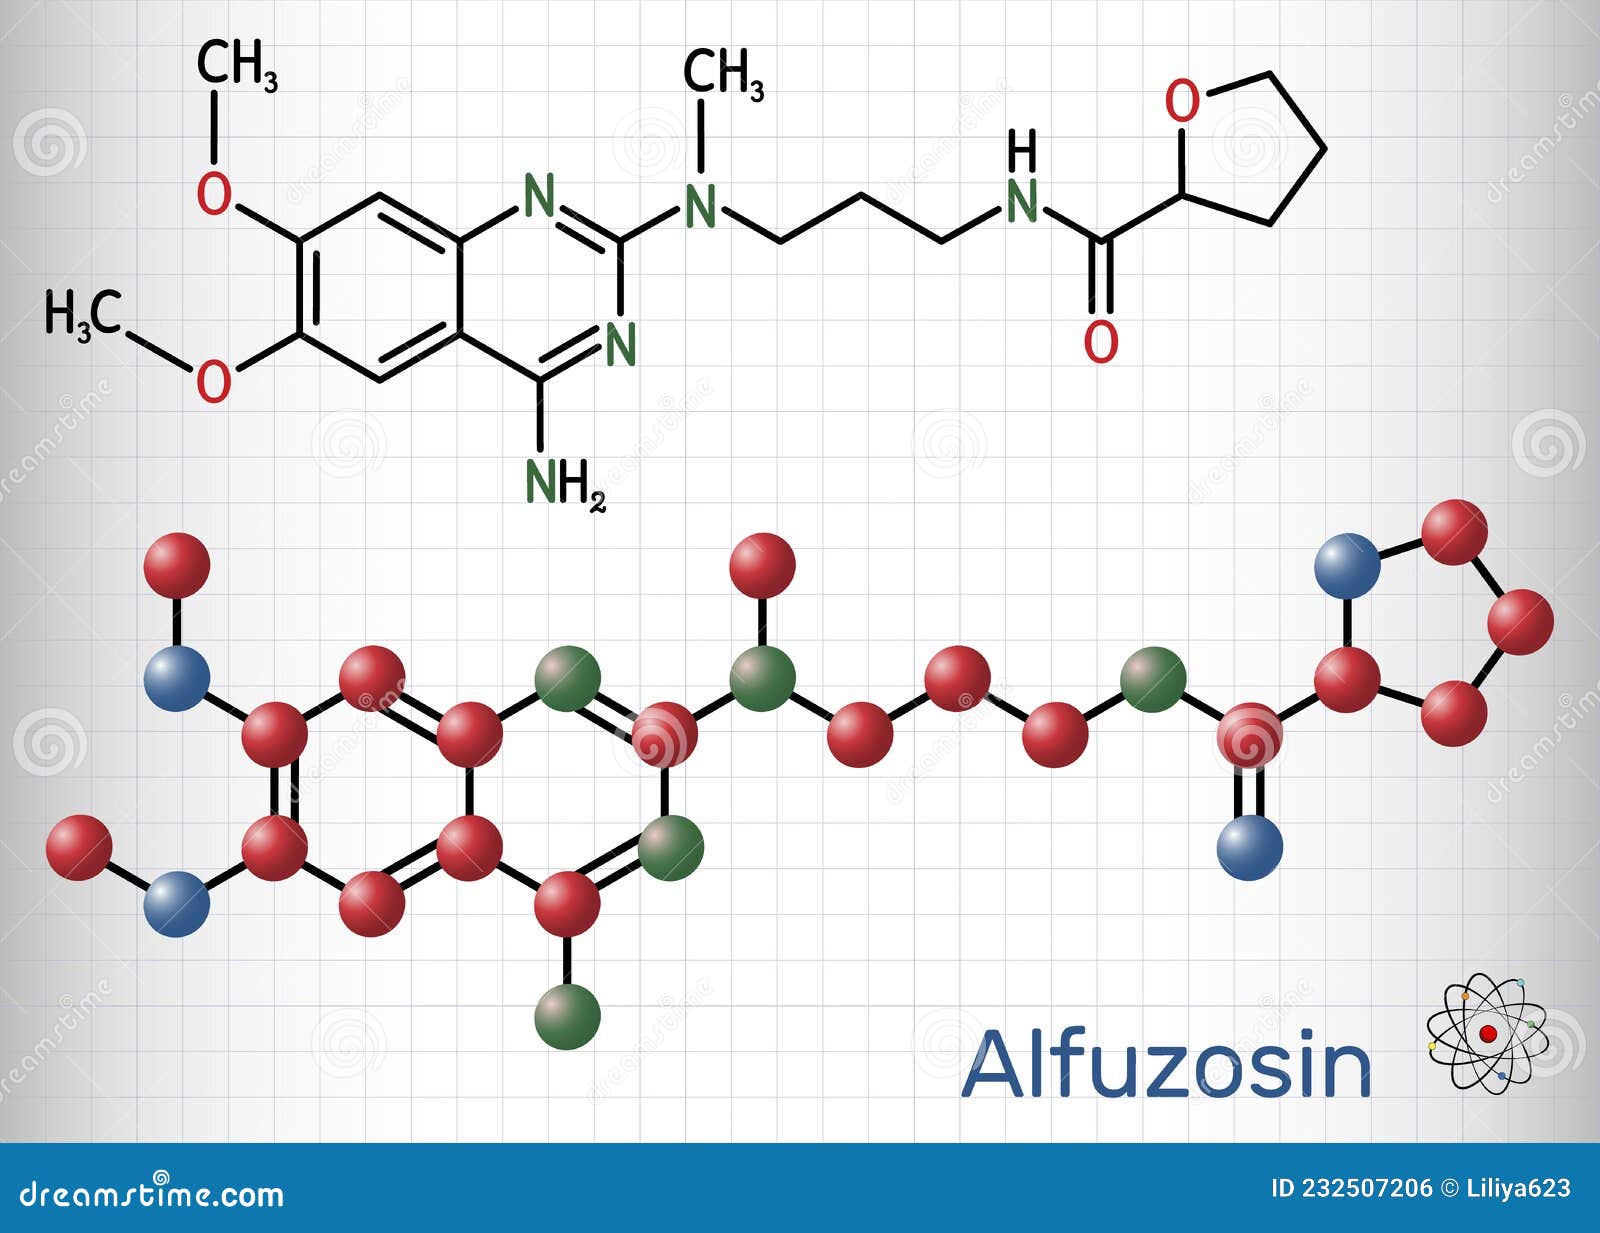 alfuzosin molecule. it is antineoplastic agent, an antihypertensive agent, an alpha-adrenergic antagonist. structural